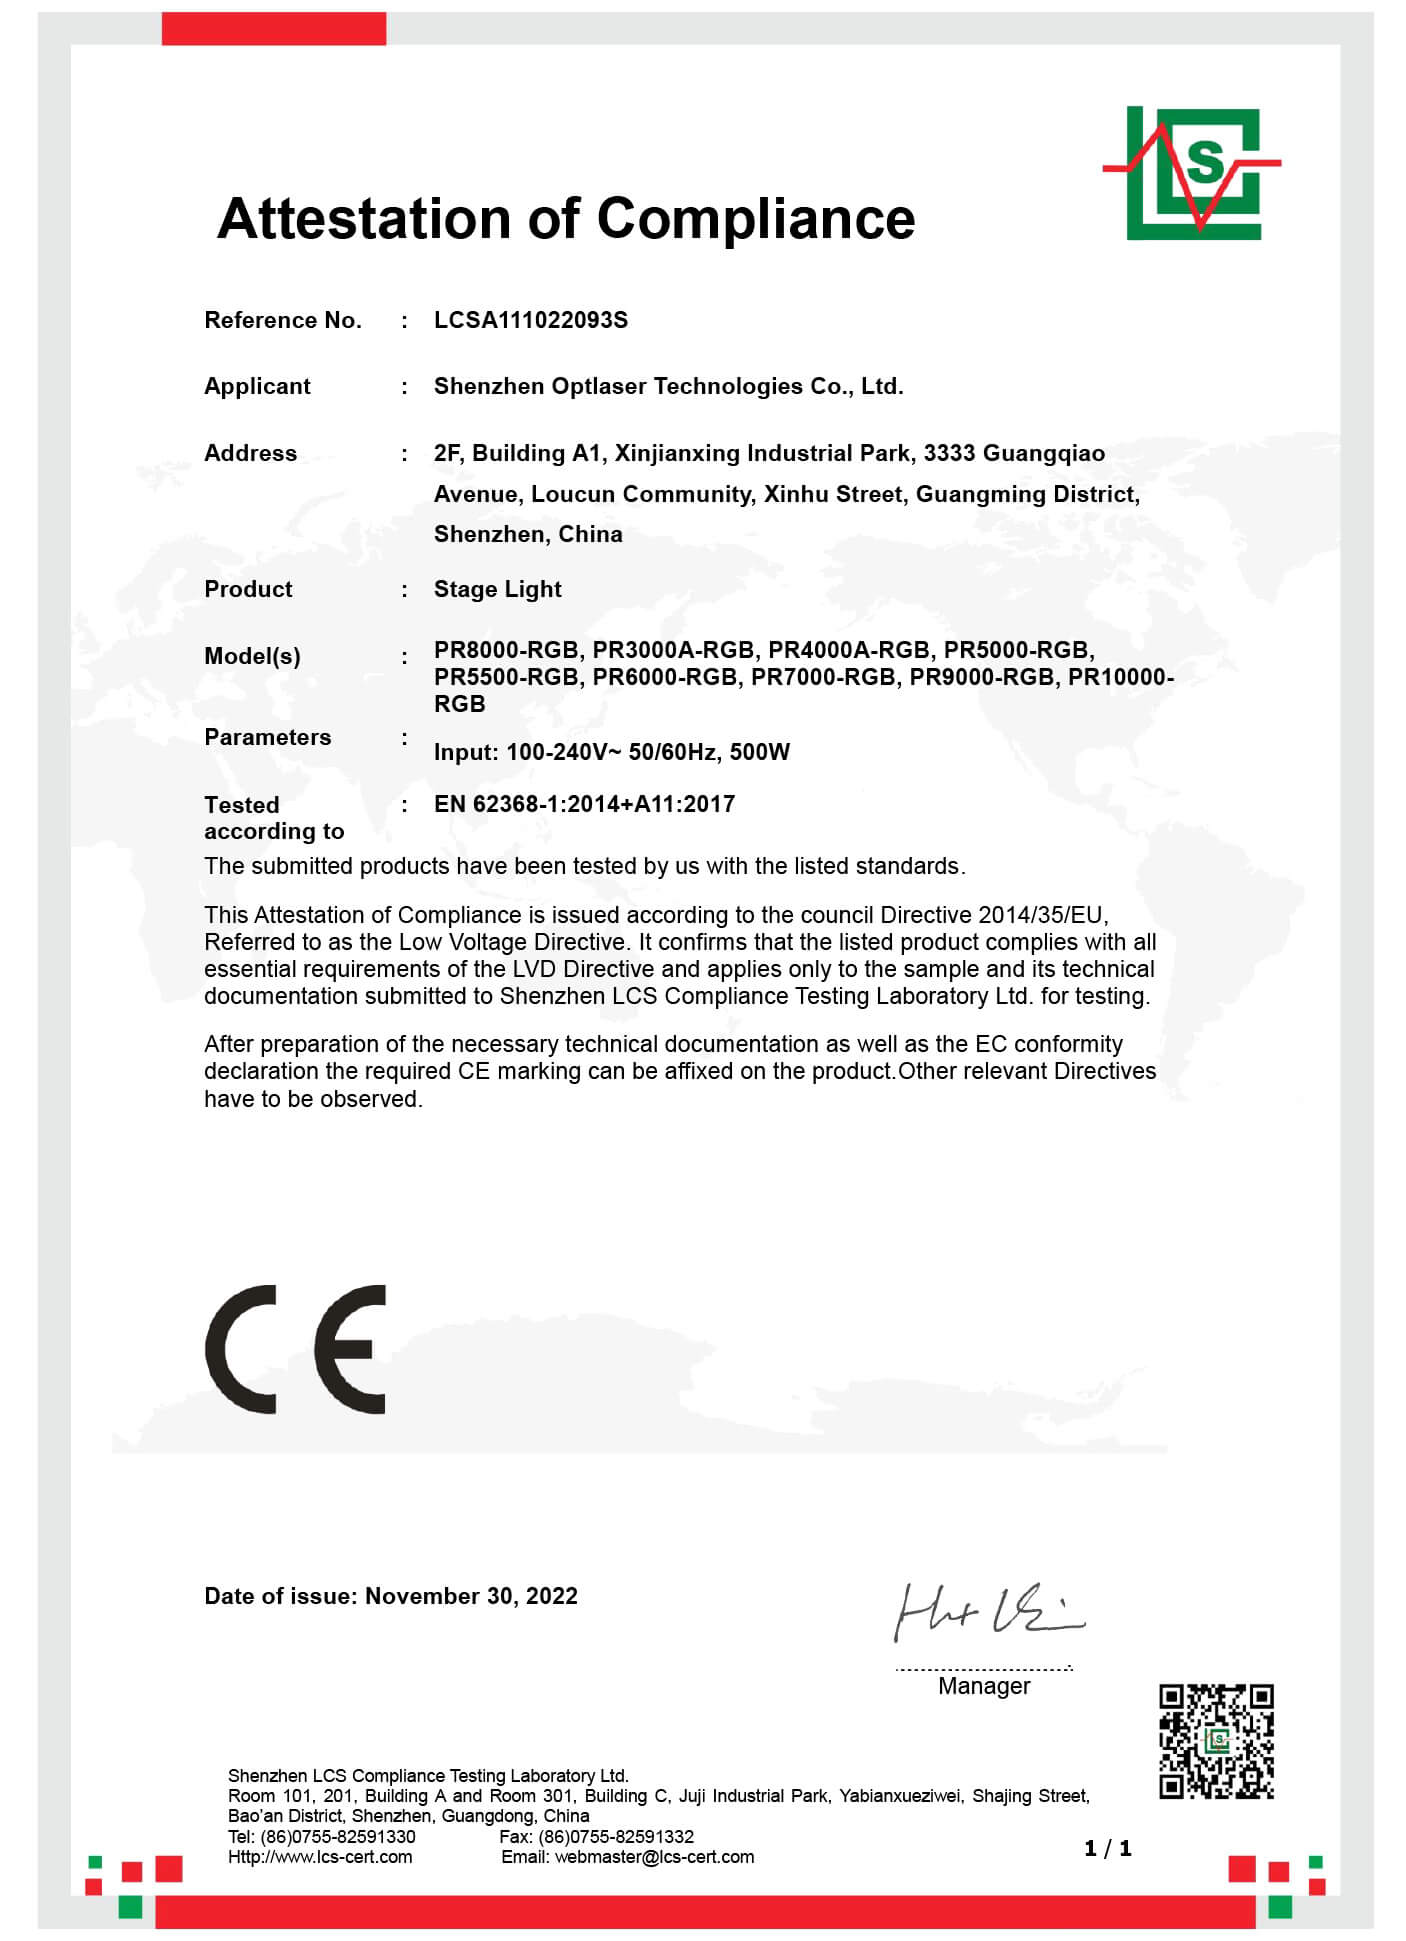 LCSA111022093S-certificate